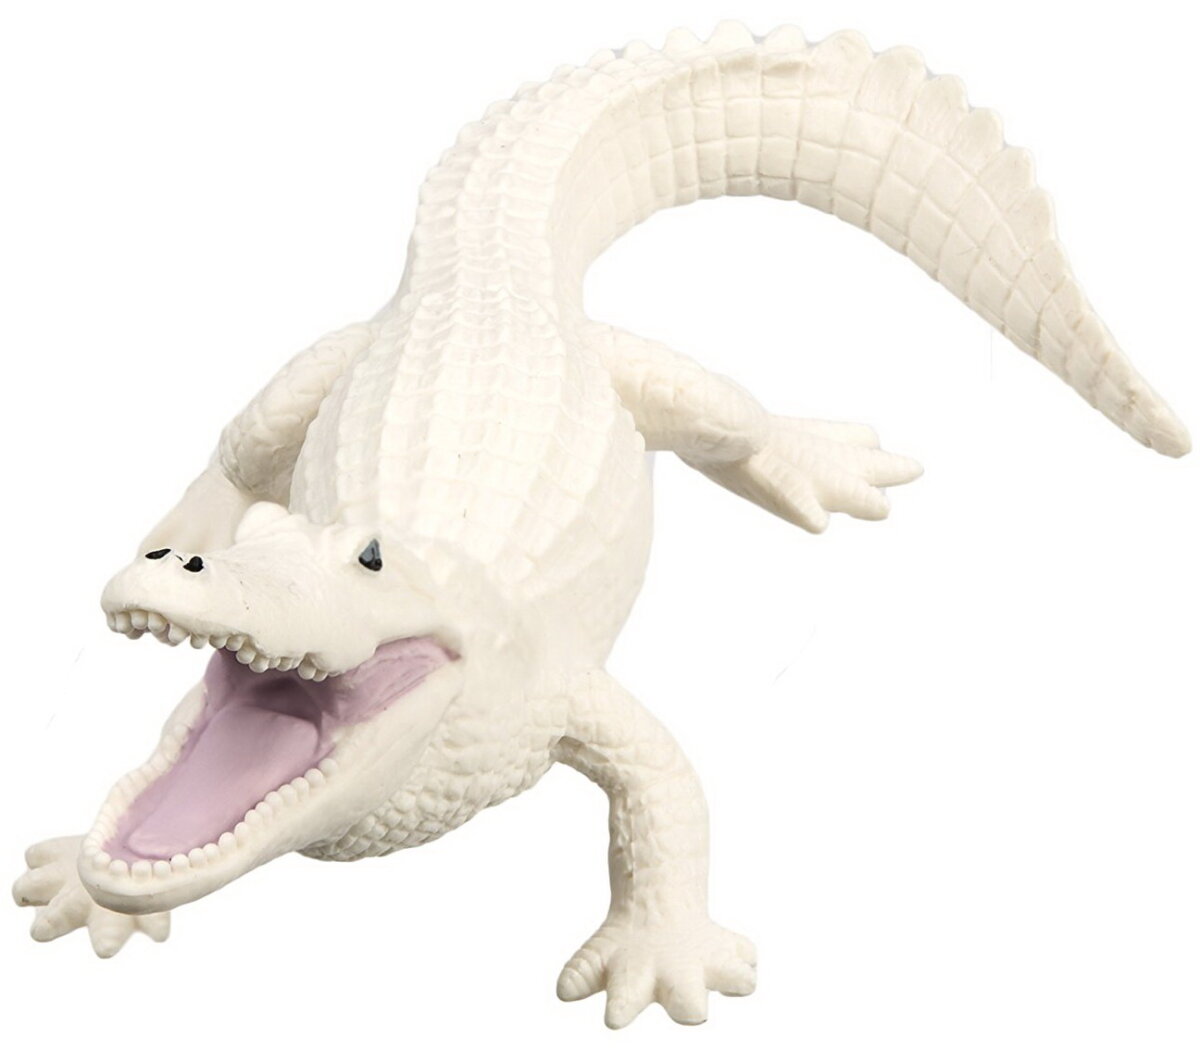 Safari Ltd White Alligator Wildlife Replica Figure Toy 291929 for sale online 